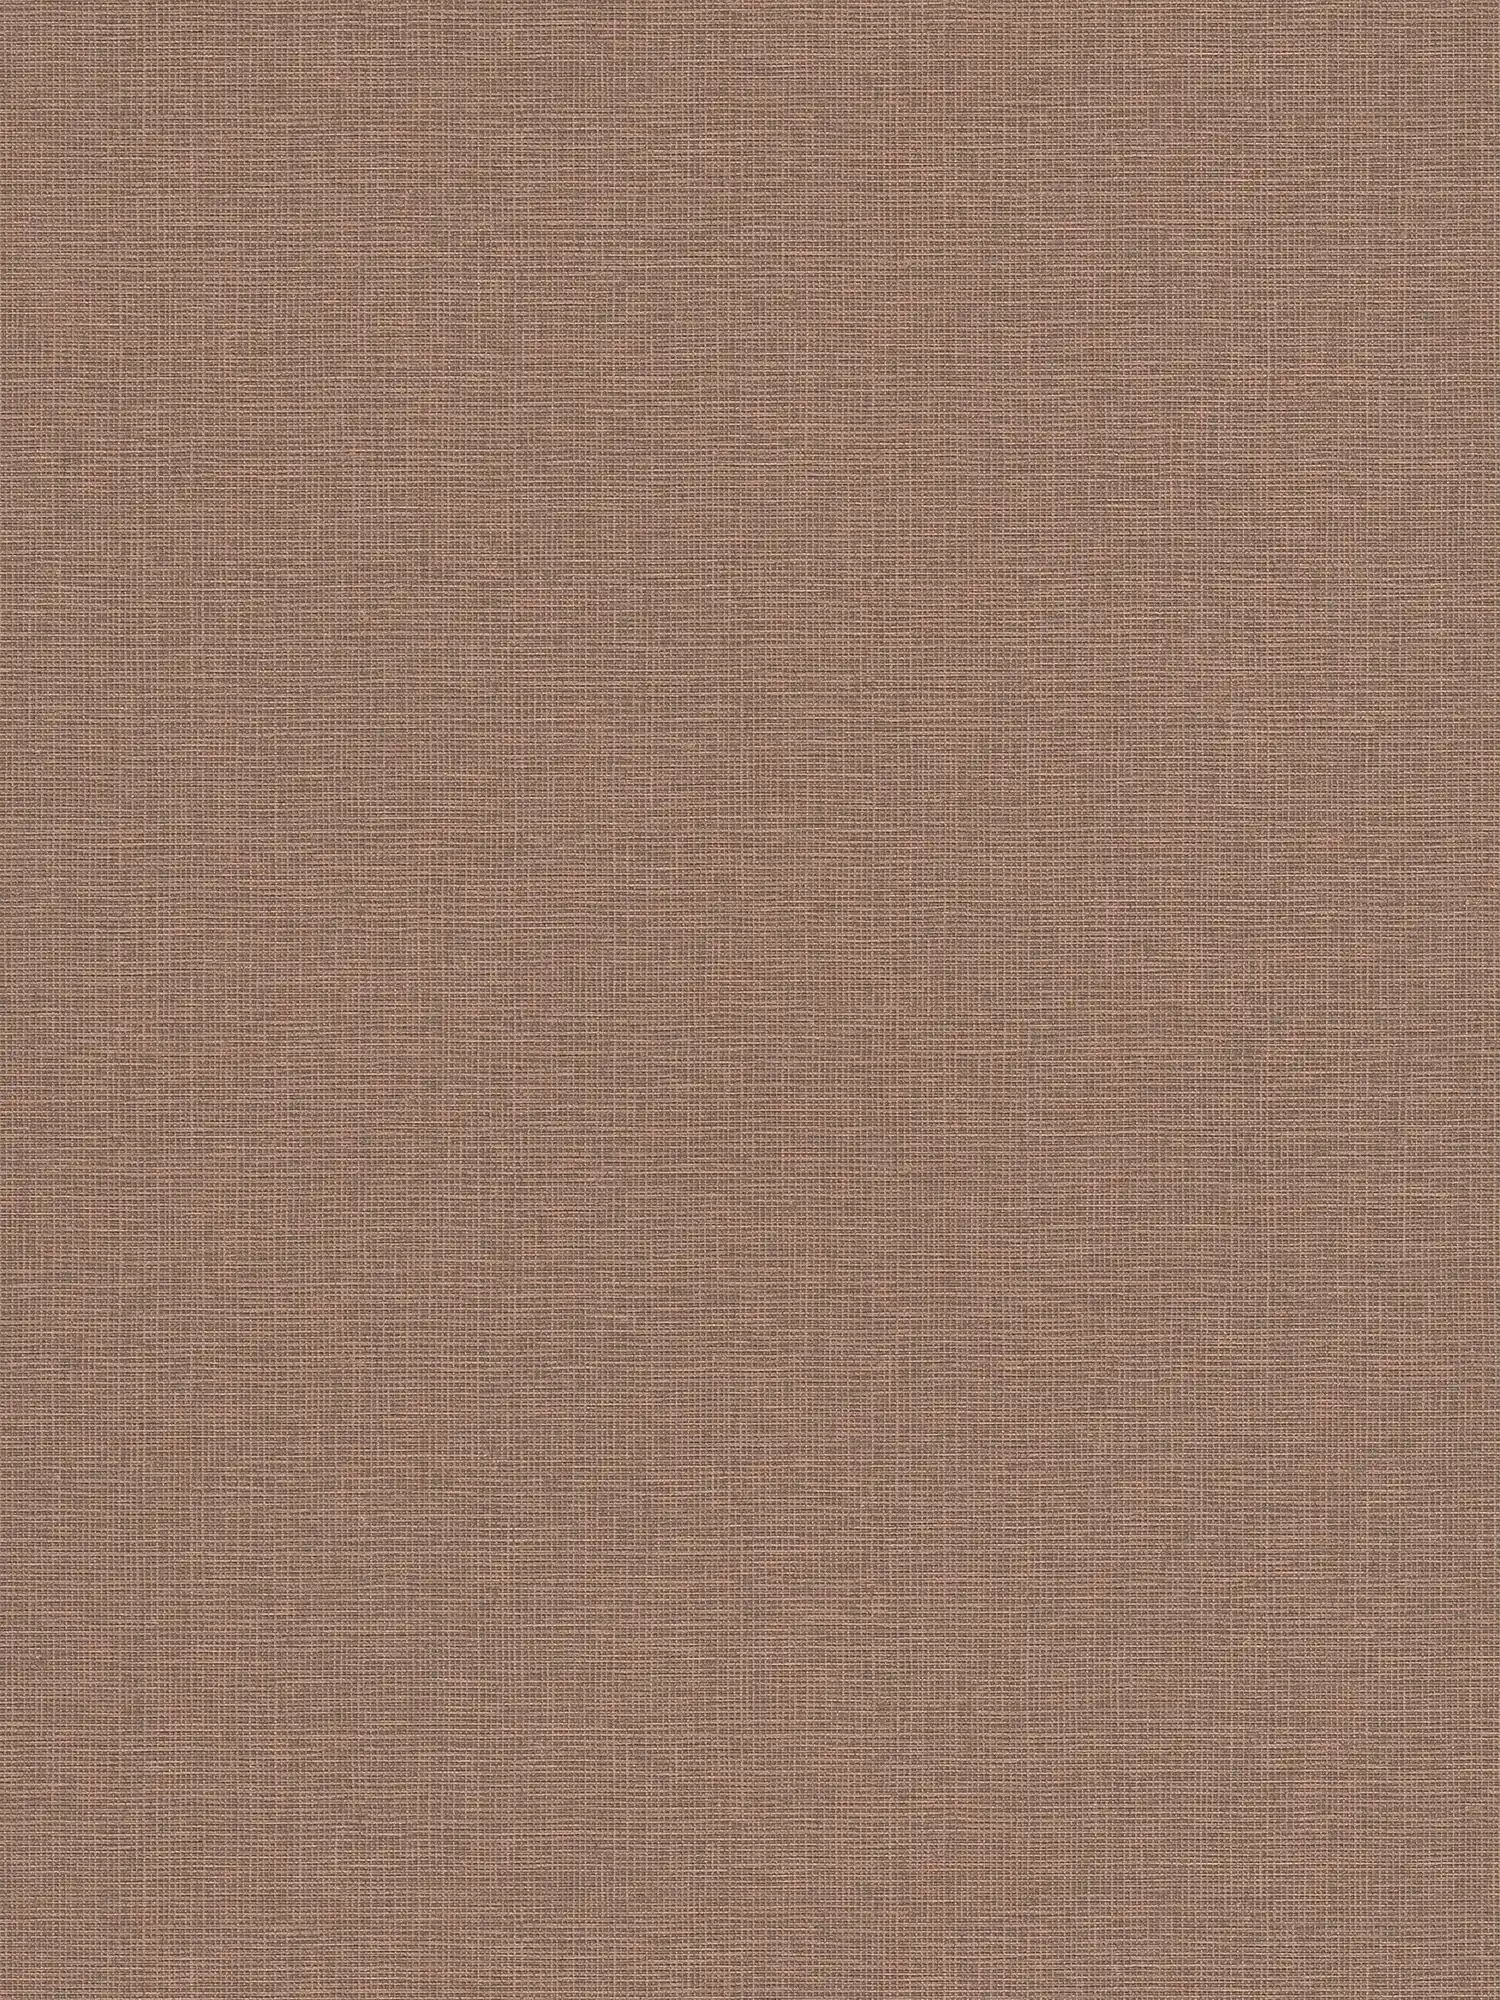 Non-woven wallpaper plain with linen texture - brown
